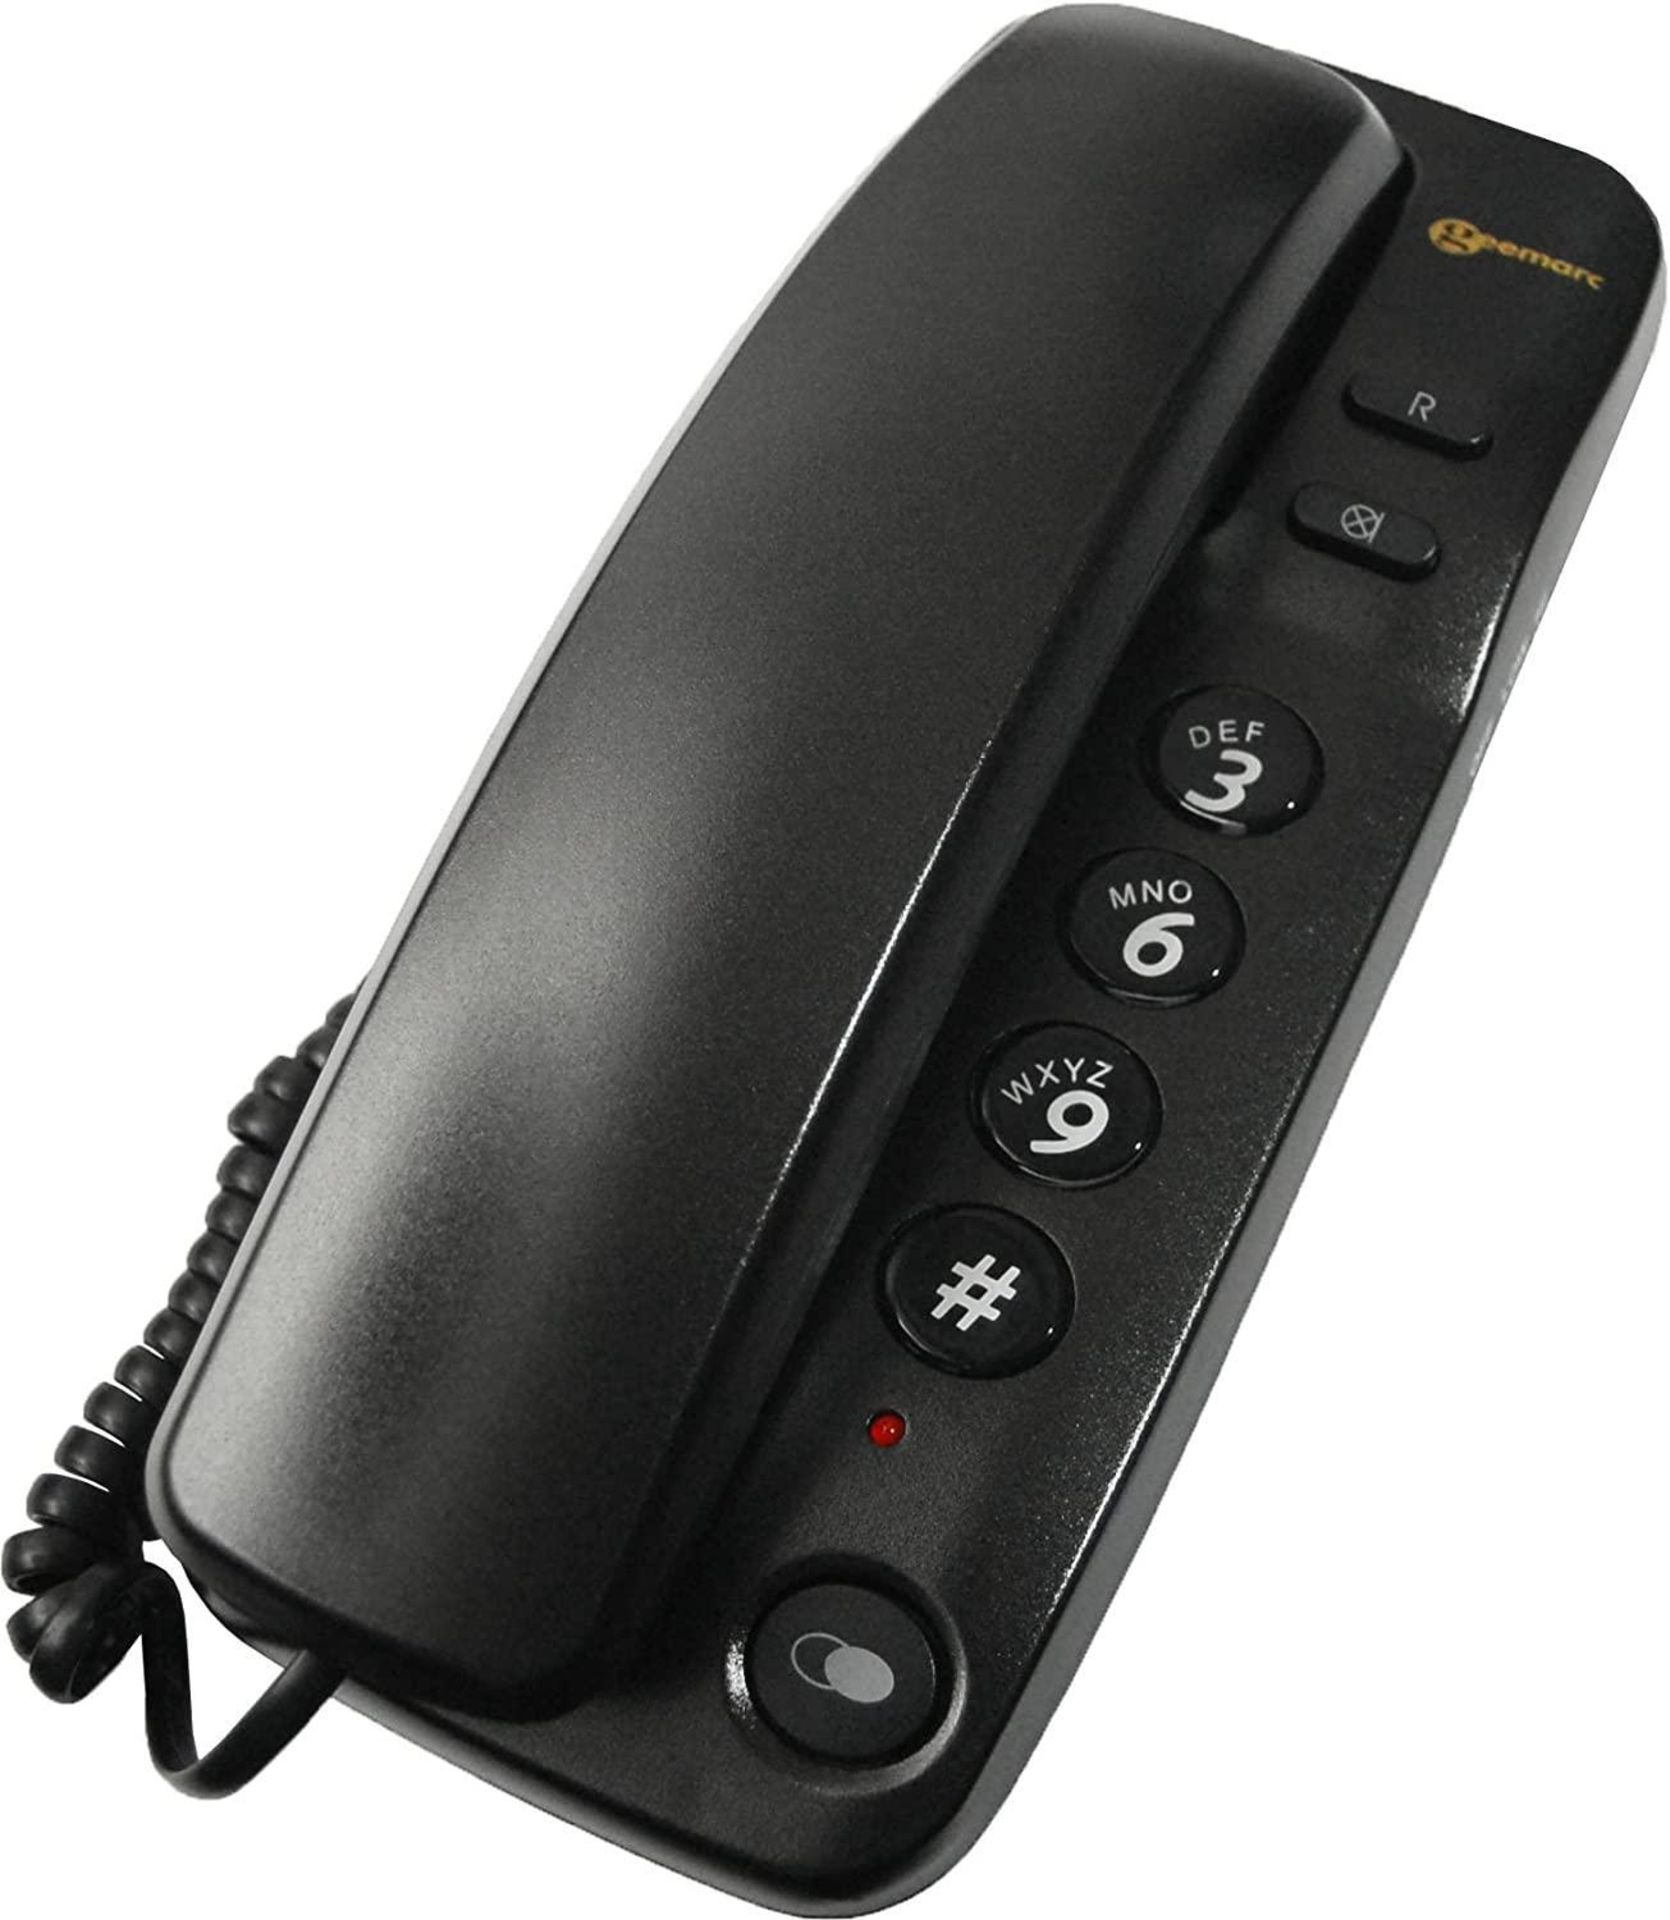 Geemarc Marbella Gondola Style UK Version Corded Telephone - Black £9.99 RRP